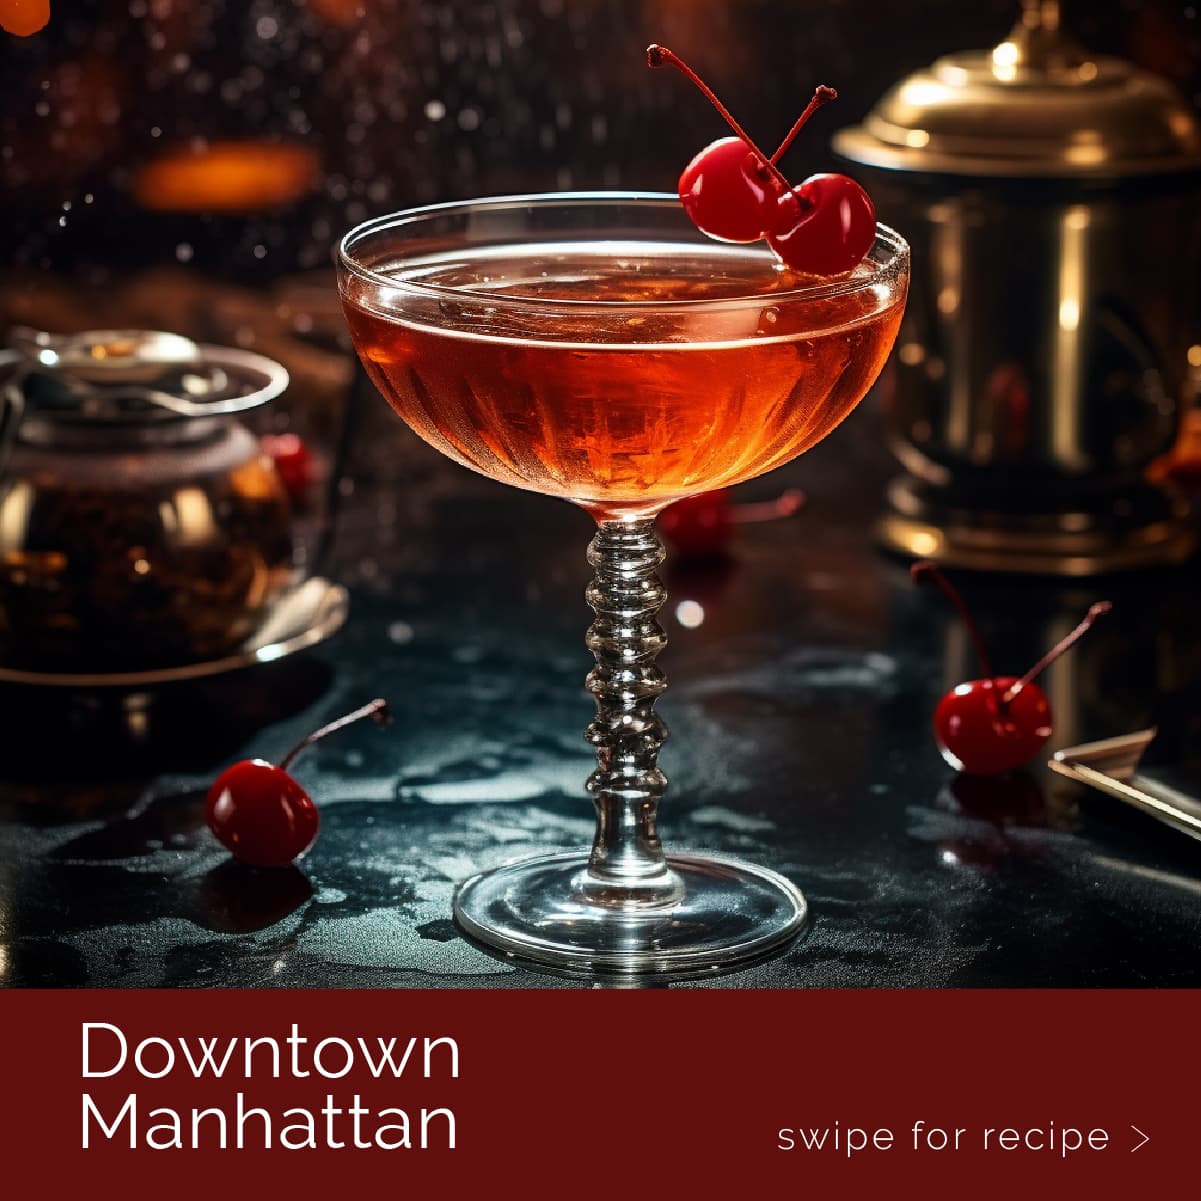 A Downtown Manhattan cocktail